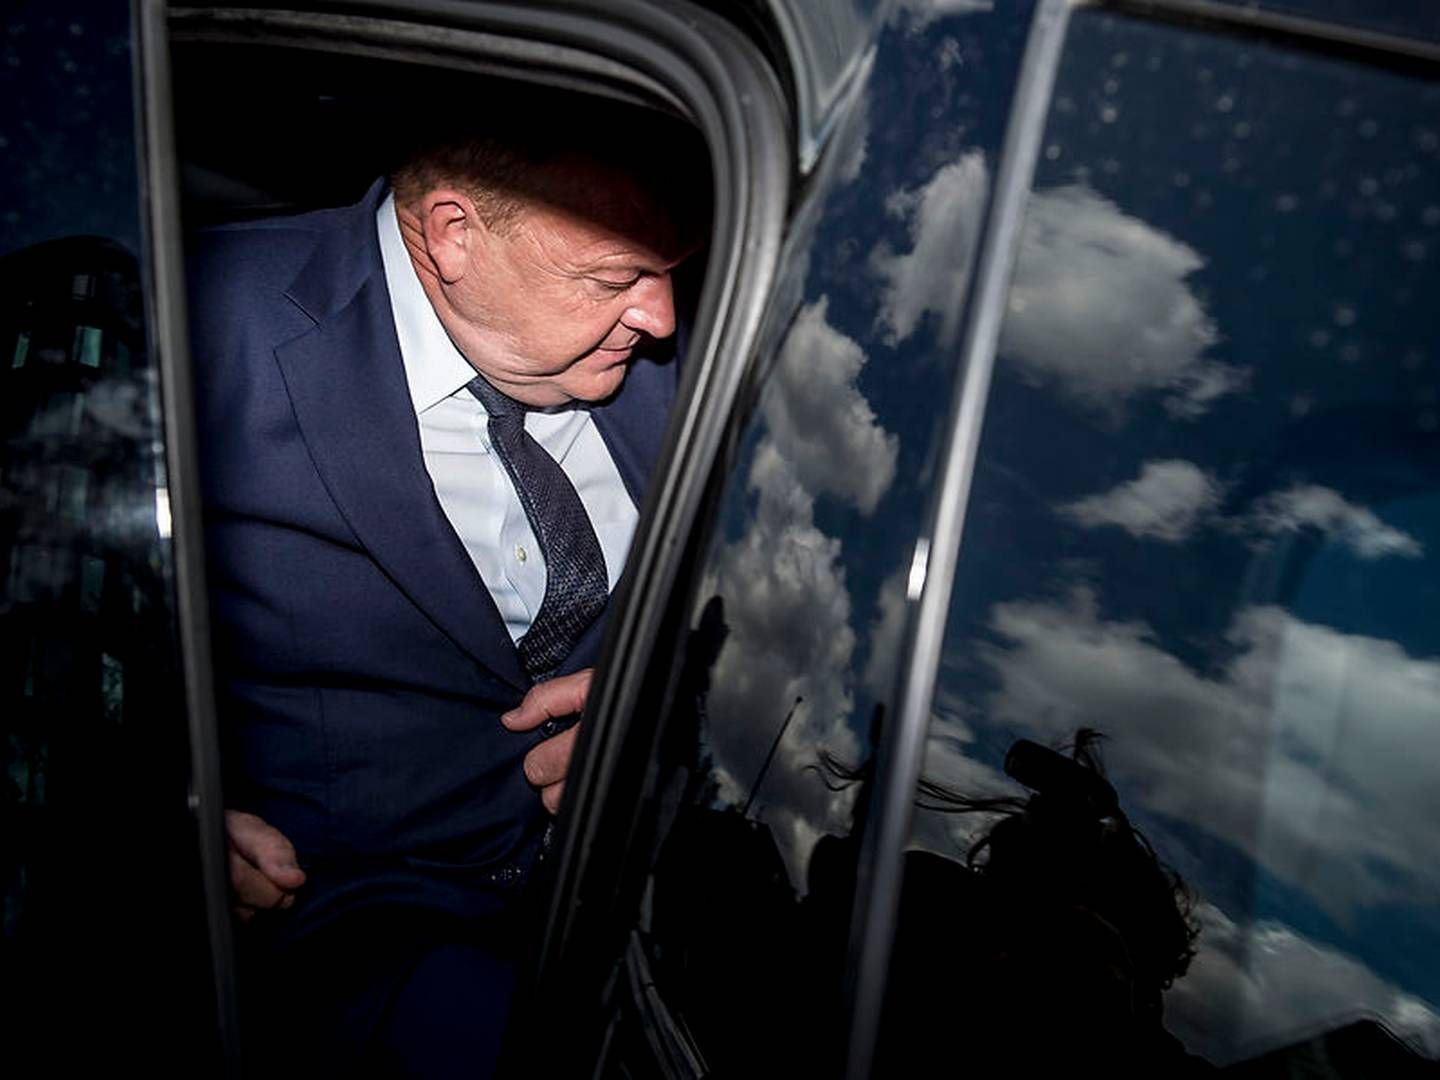 Lars Løkke Rasmussen skifter spor og har som førsteprioritet at danne en regering over midten. | Foto: Ritzau Scanpix/Mads Claus Rasmussen